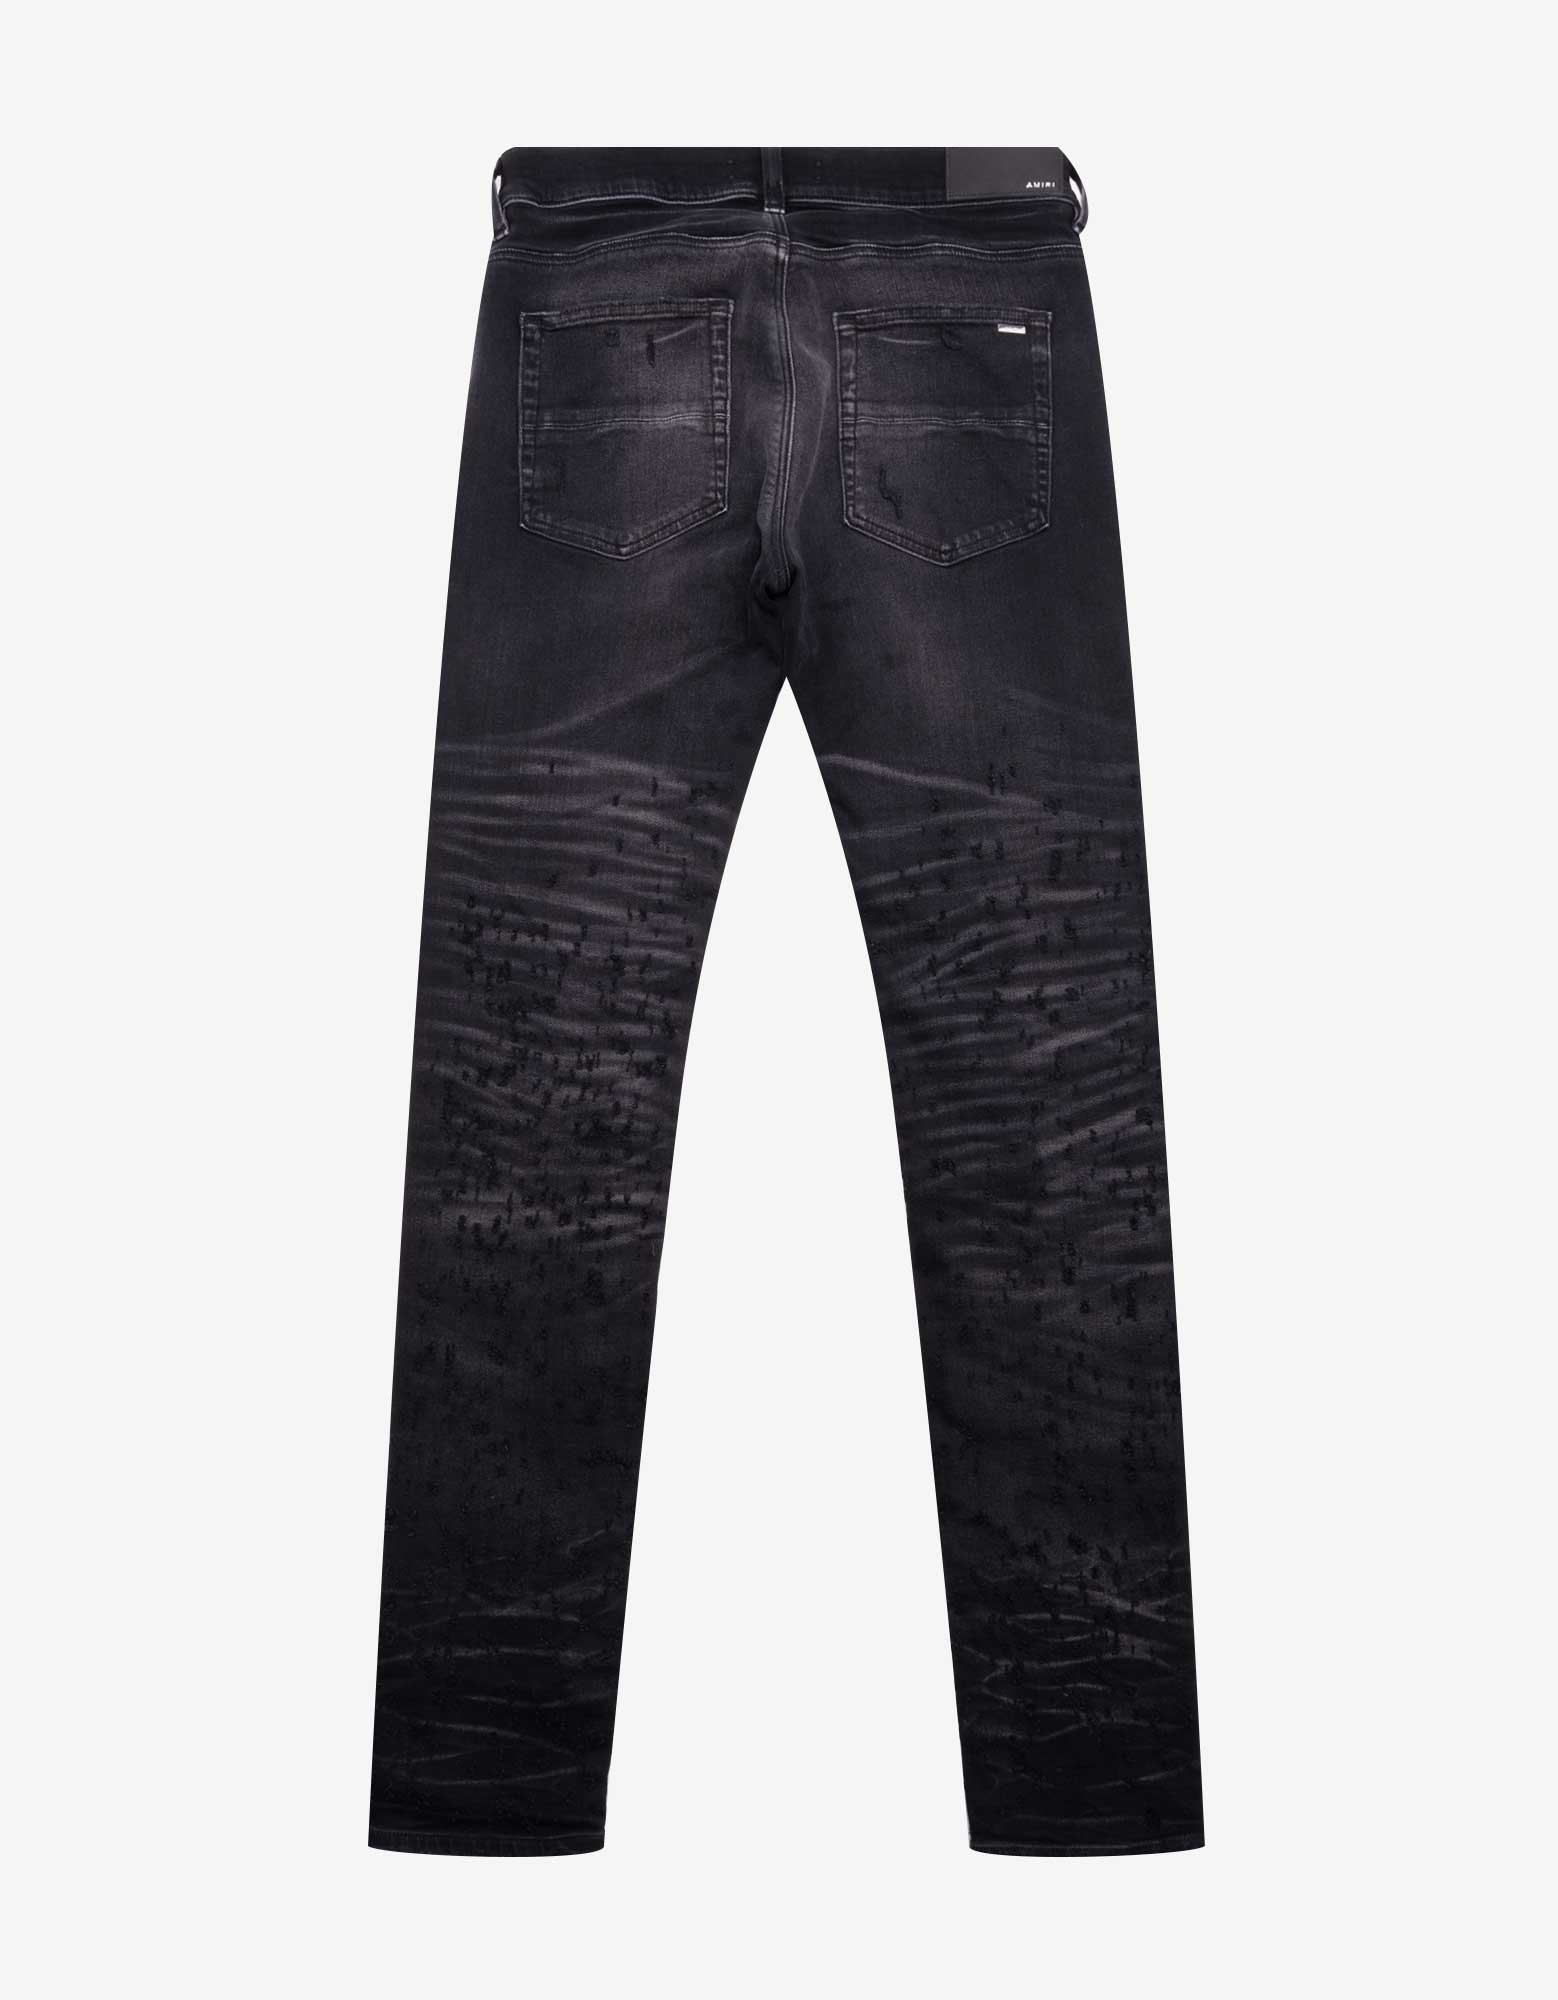 Black Shotgun Skinny Jeans - 2